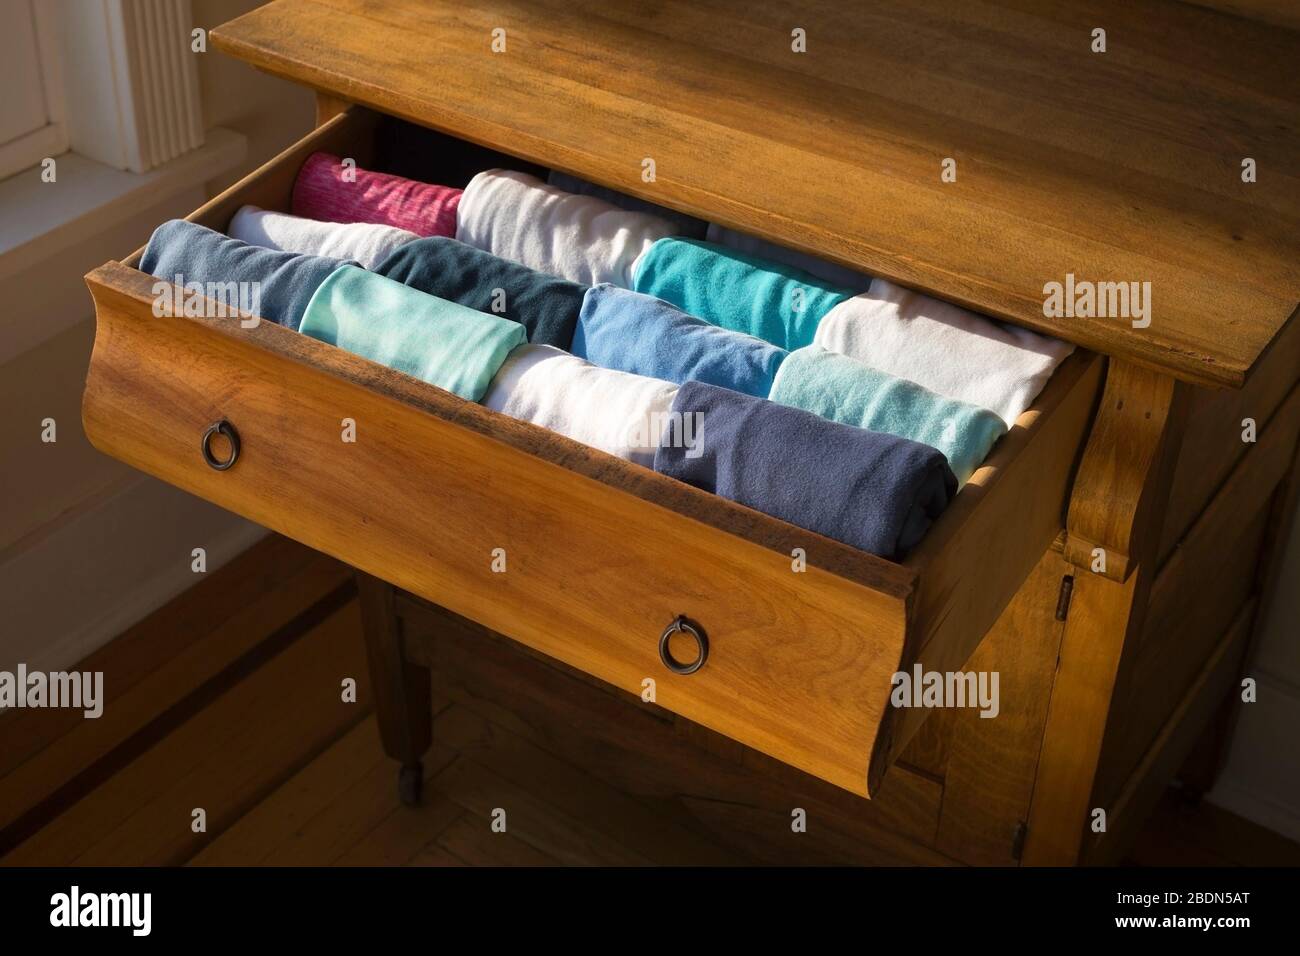 Woman's shirts in an antique wood bureau drawer folded in the KonMari method of home organization expert Marie Kondo. Stock Photo